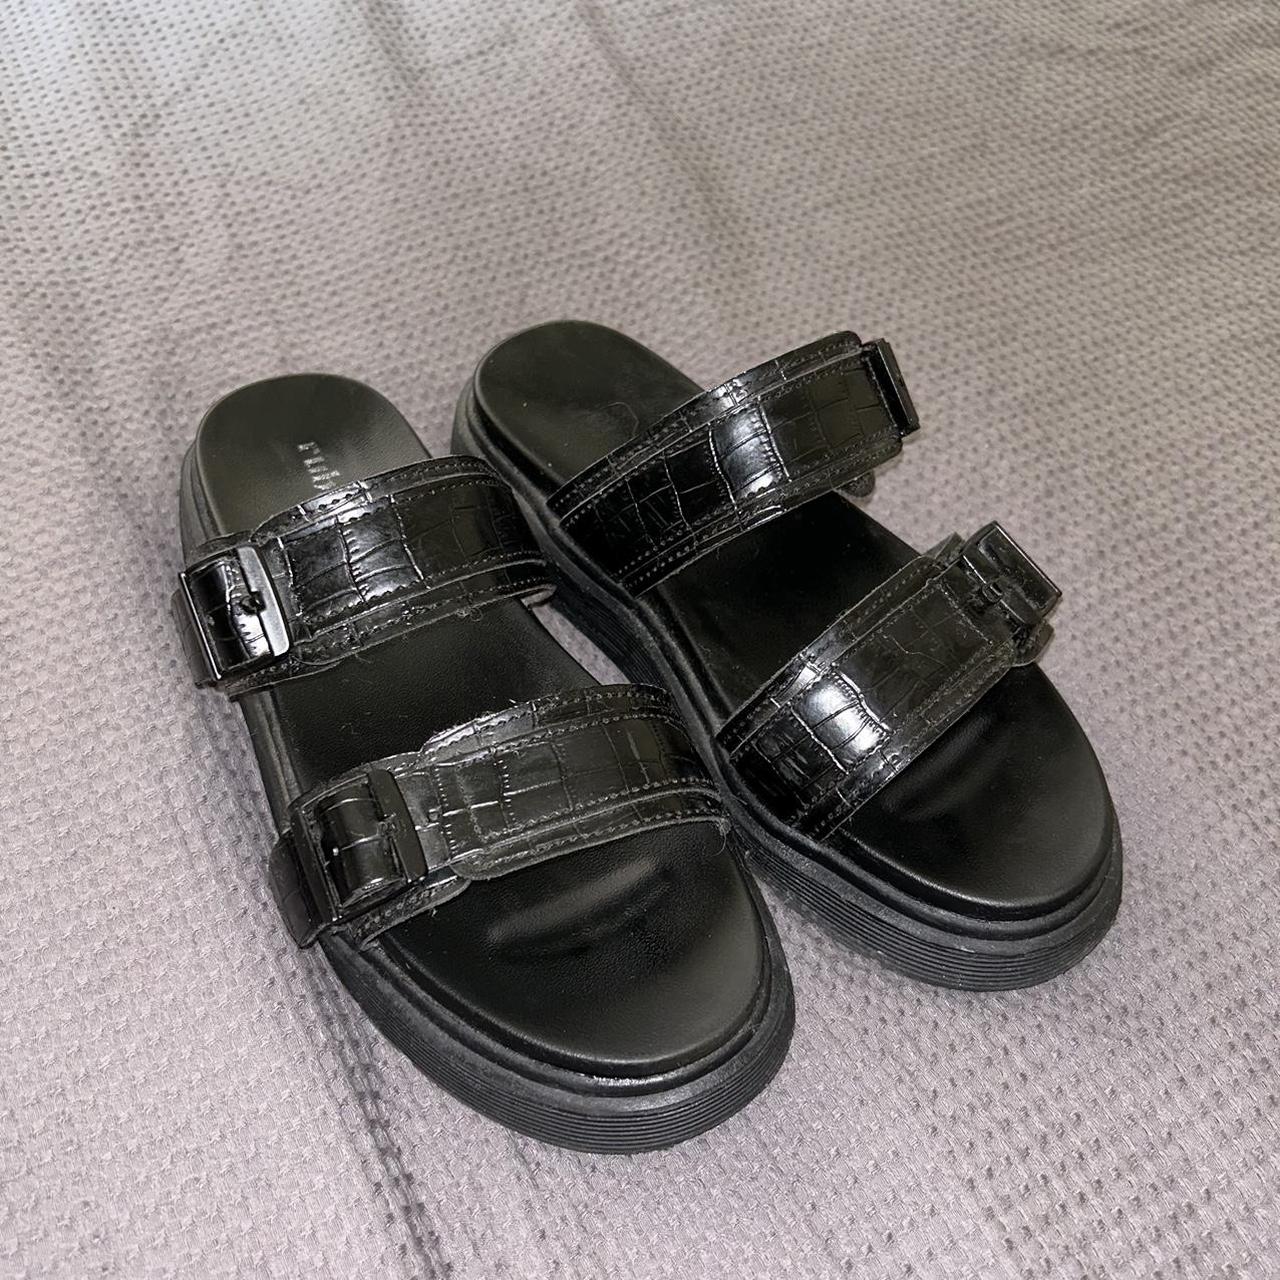 Rubi shoes - black Platform sandals. EUR 40 fit a... - Depop